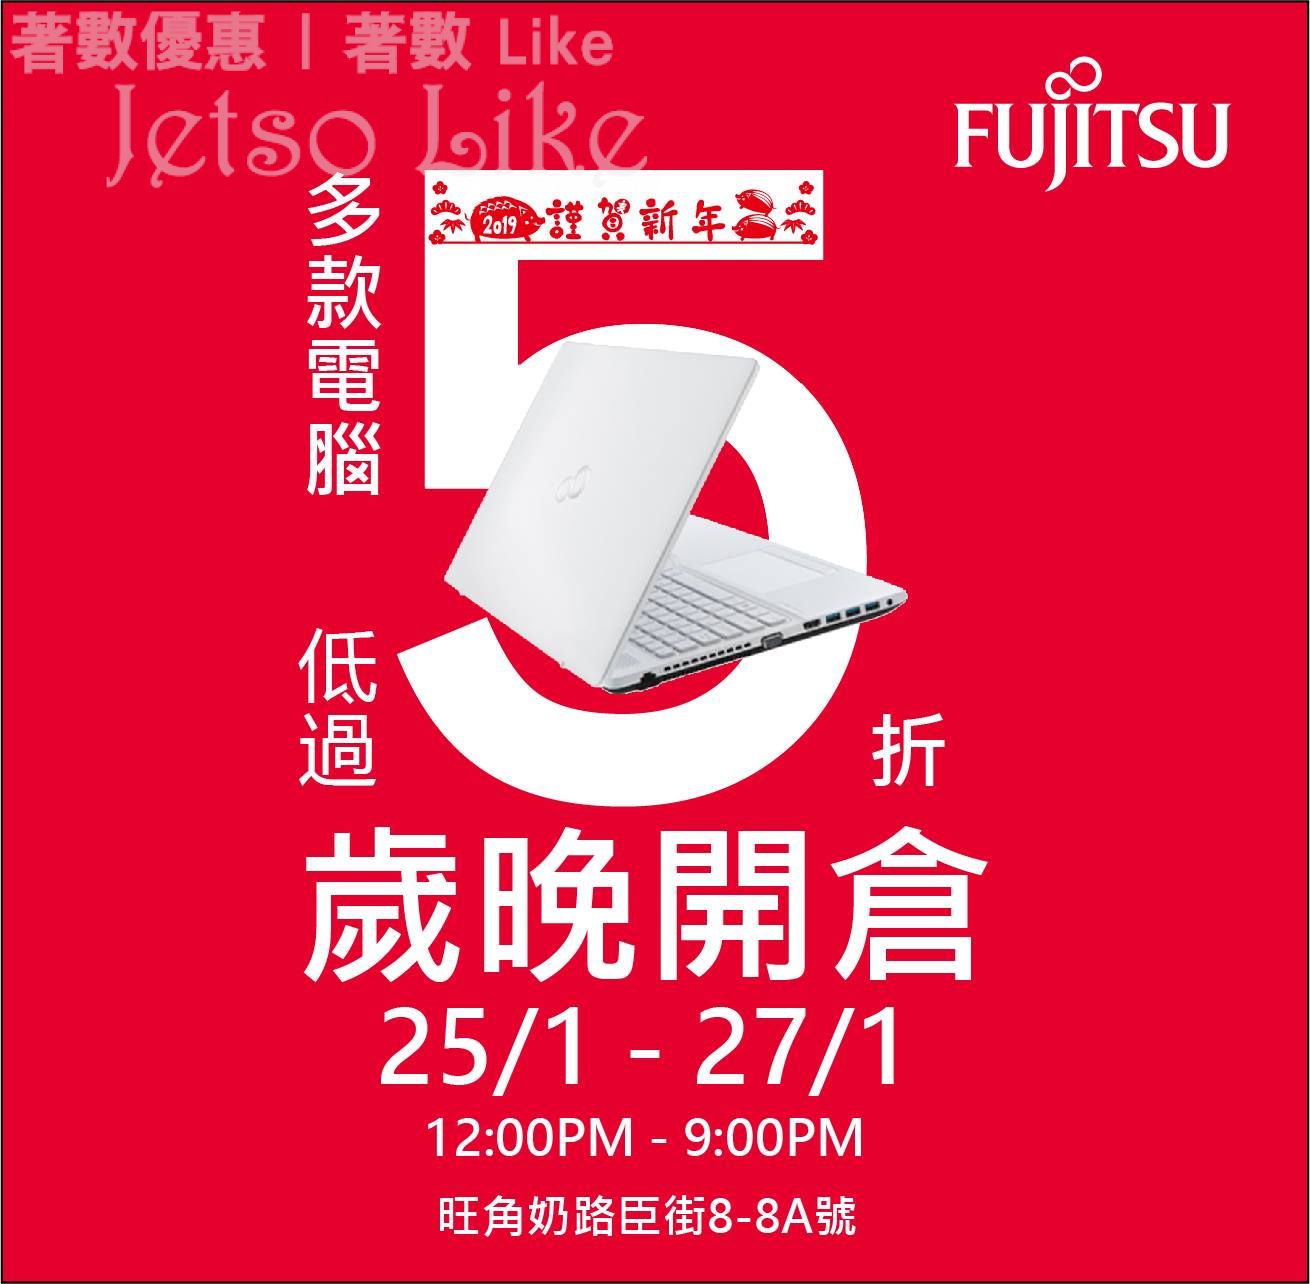 Fujitsu 歲晚開倉 低至半價 27/Jan